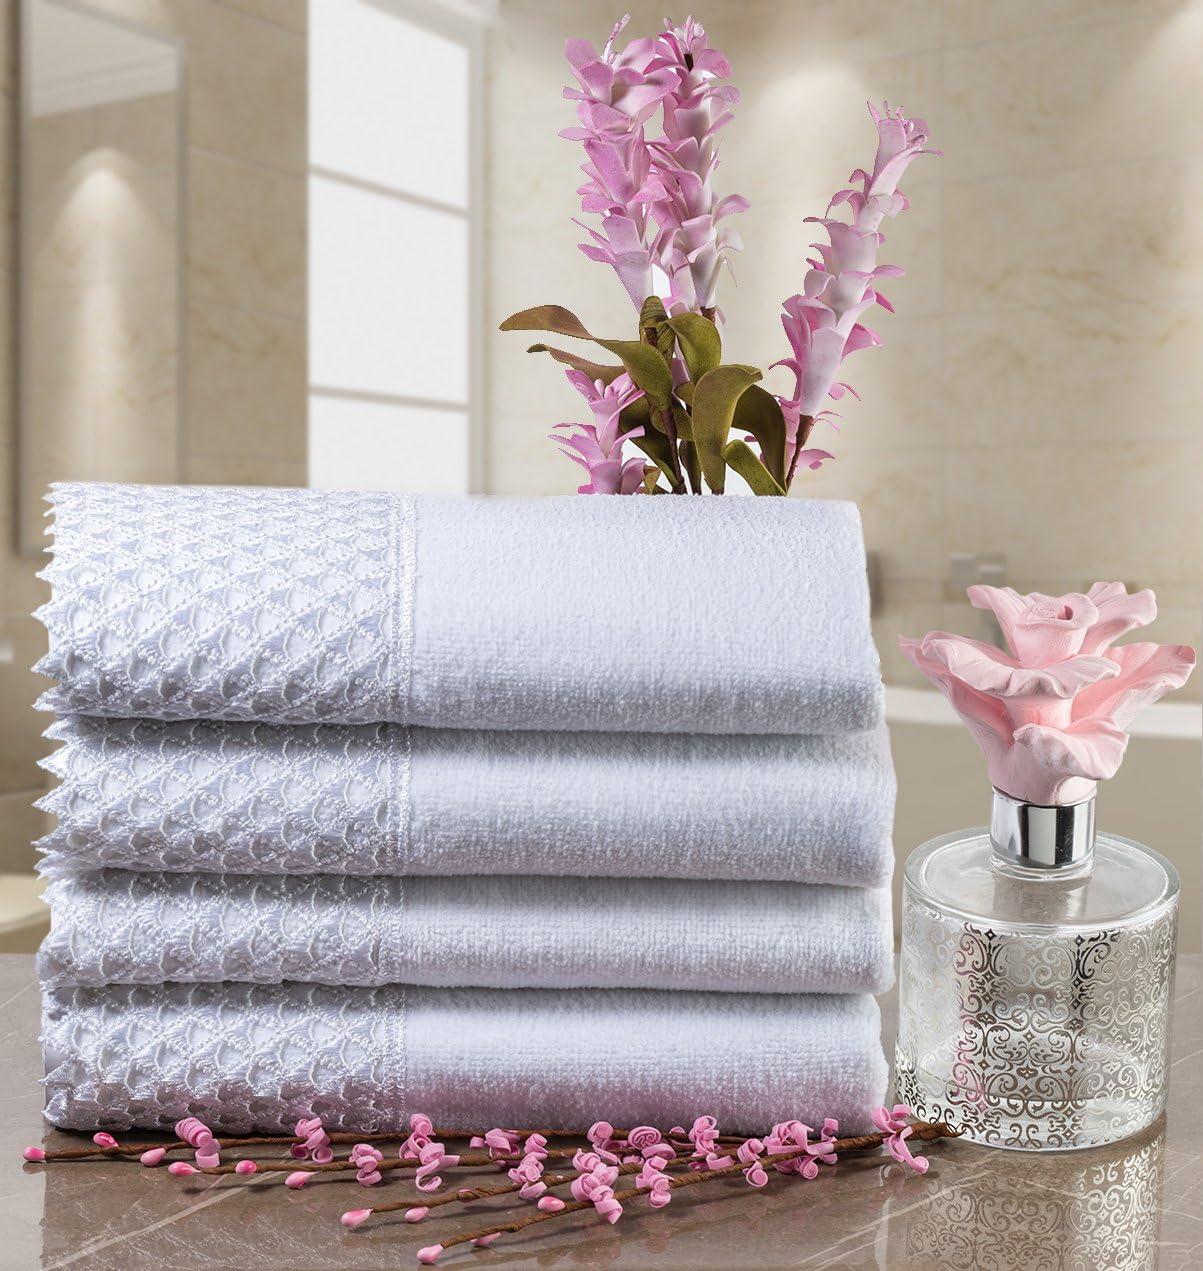 Creative Scents Cotton Fingertip Towel Set - 4 Pack - 11 x 18